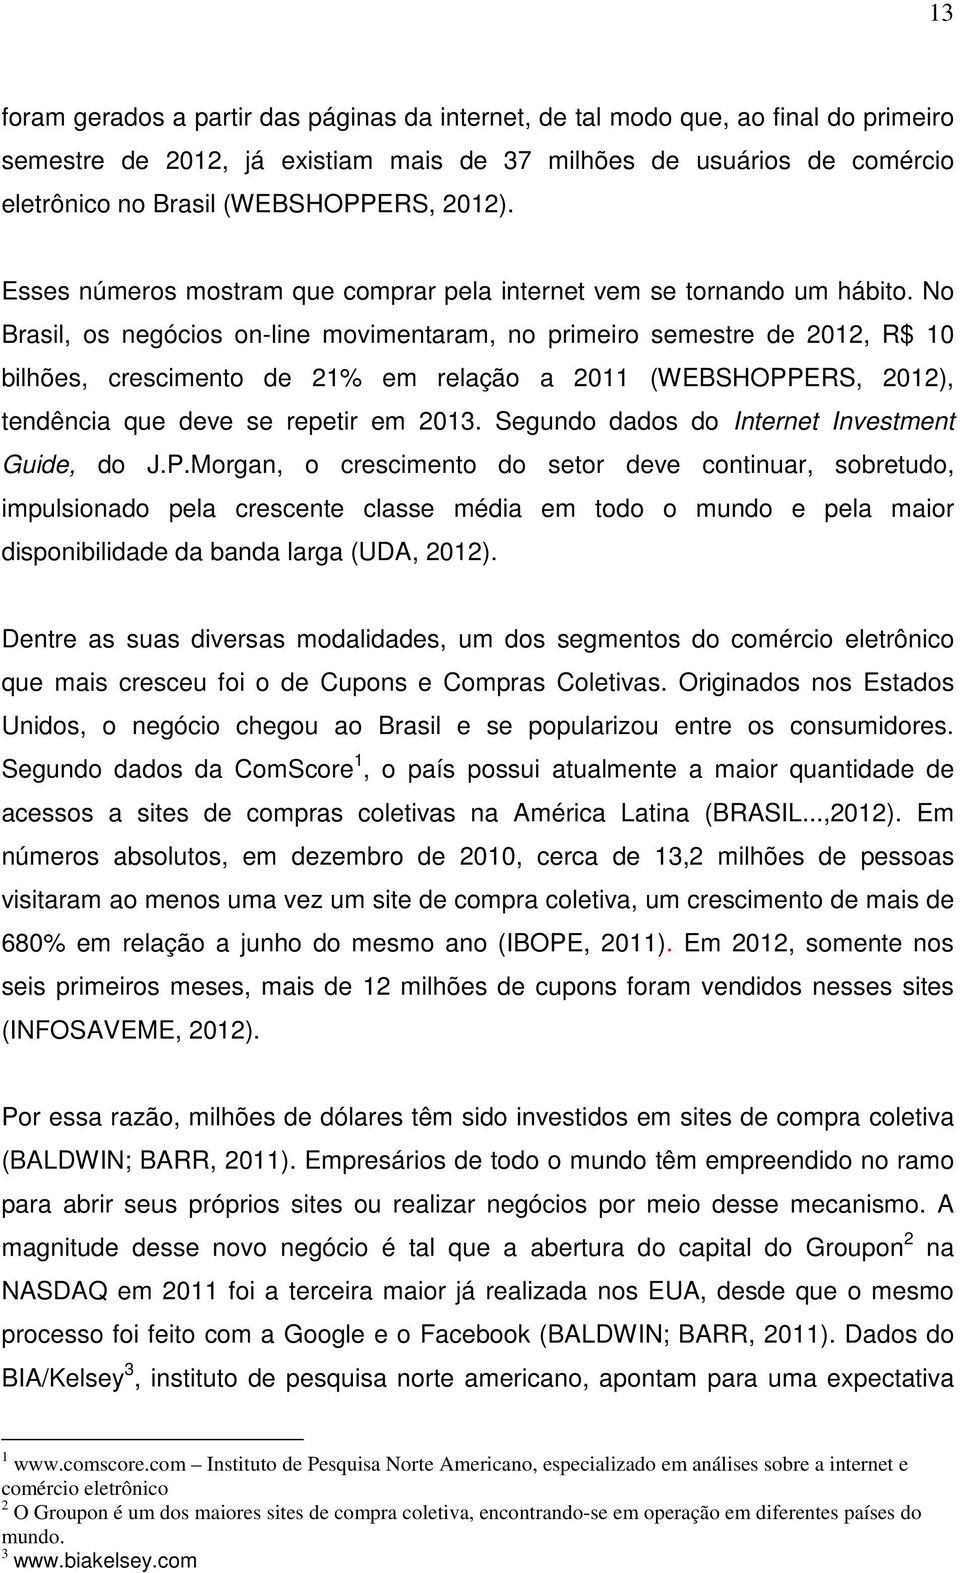 N Brasil, s ngócis n-lin mvimntaram, n primir smstr d 2012, R$ 10 bilhõs, crscimnt d 21% m rlaçã a 2011 (WEBSHOPP